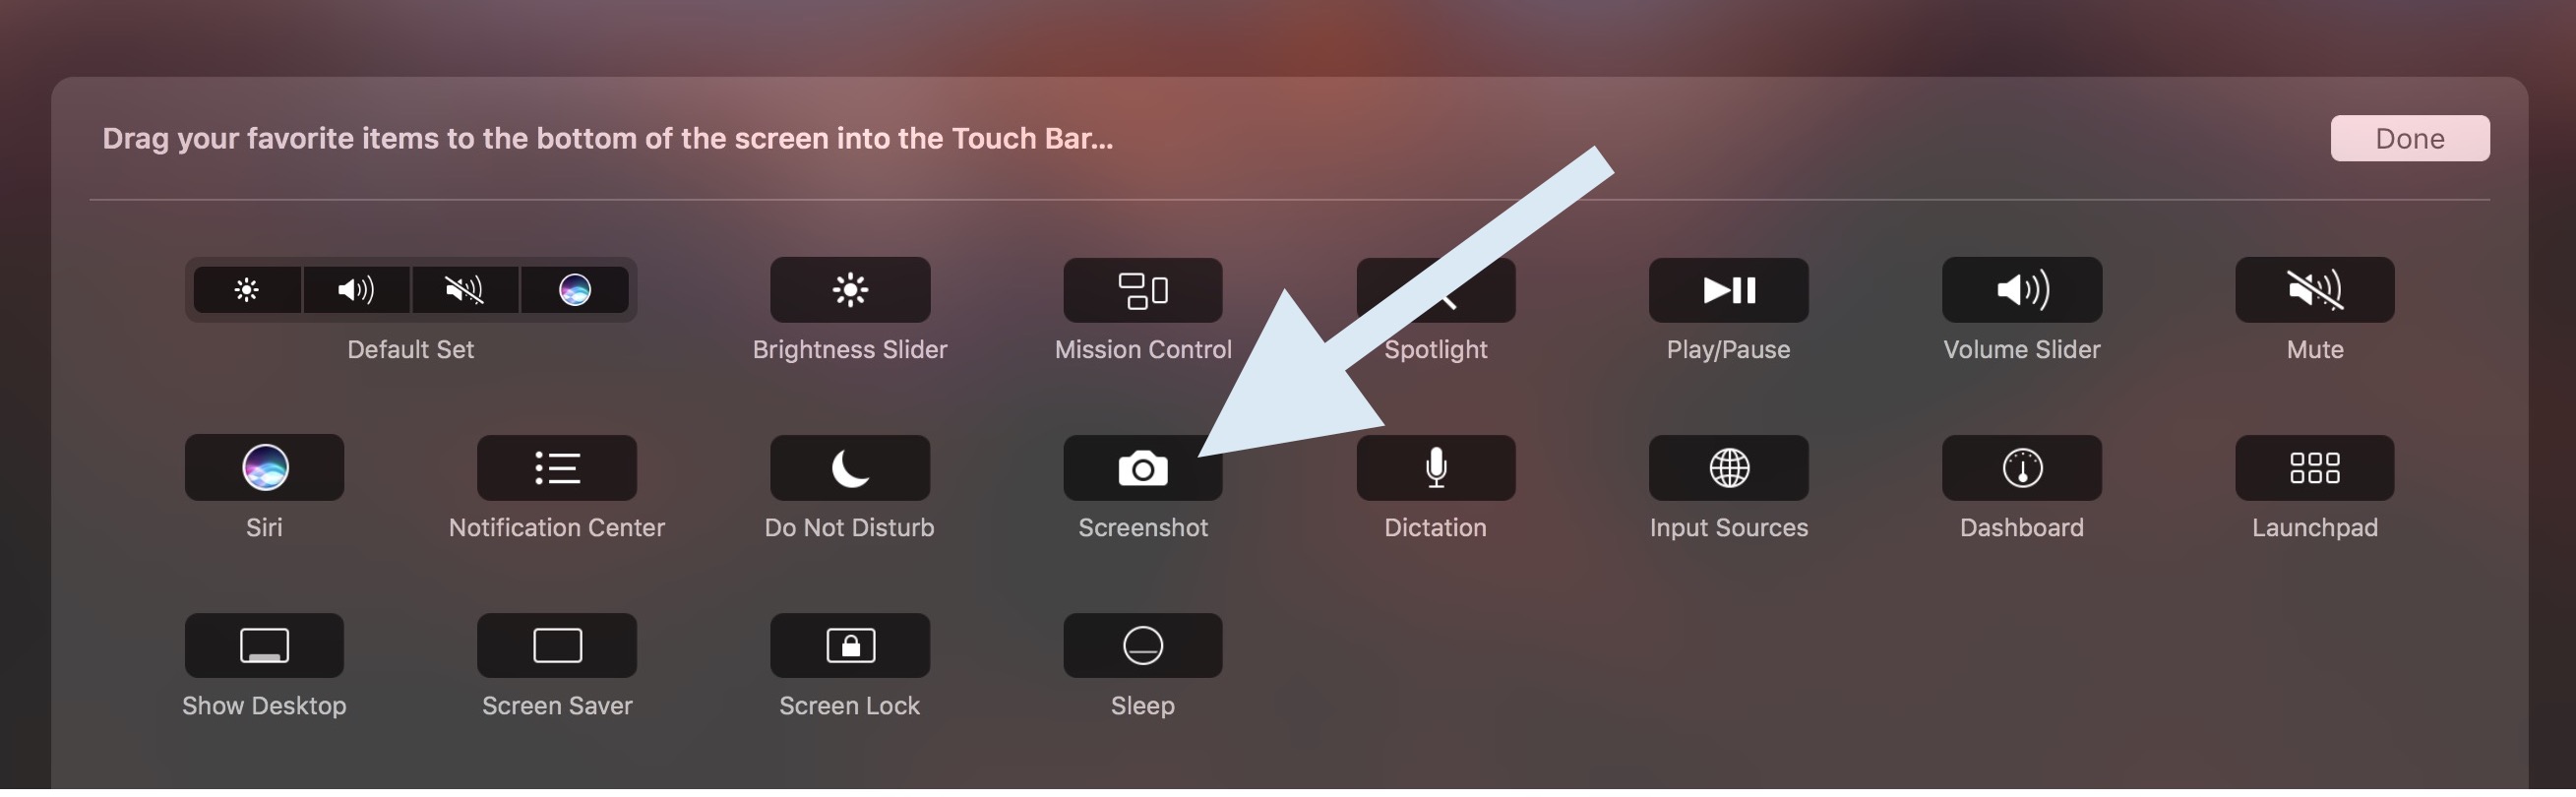 customize-touch-bar-screenshot